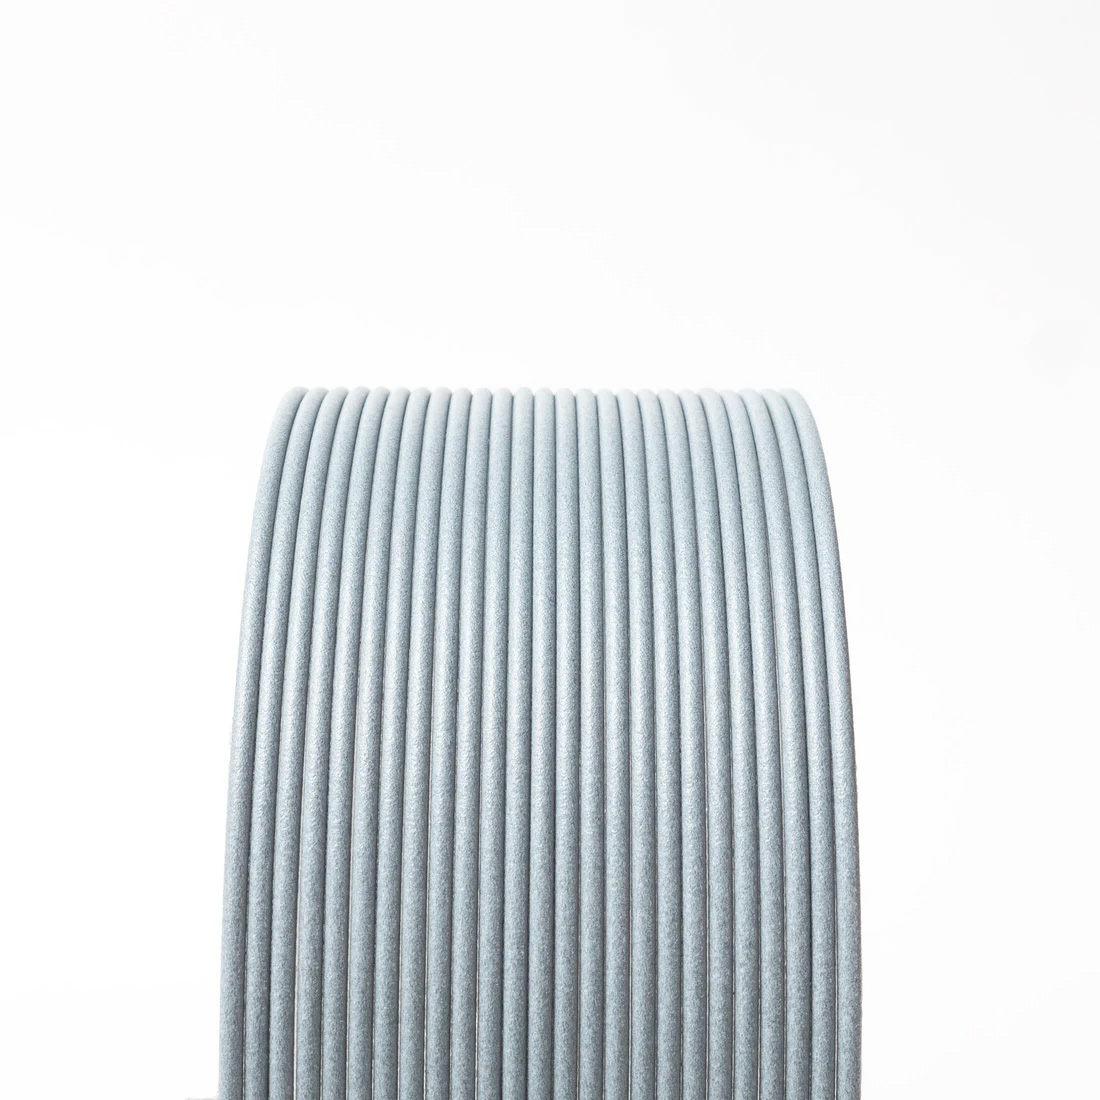 High Temp Light Grey Carbon Fibre PLA 1.75mm